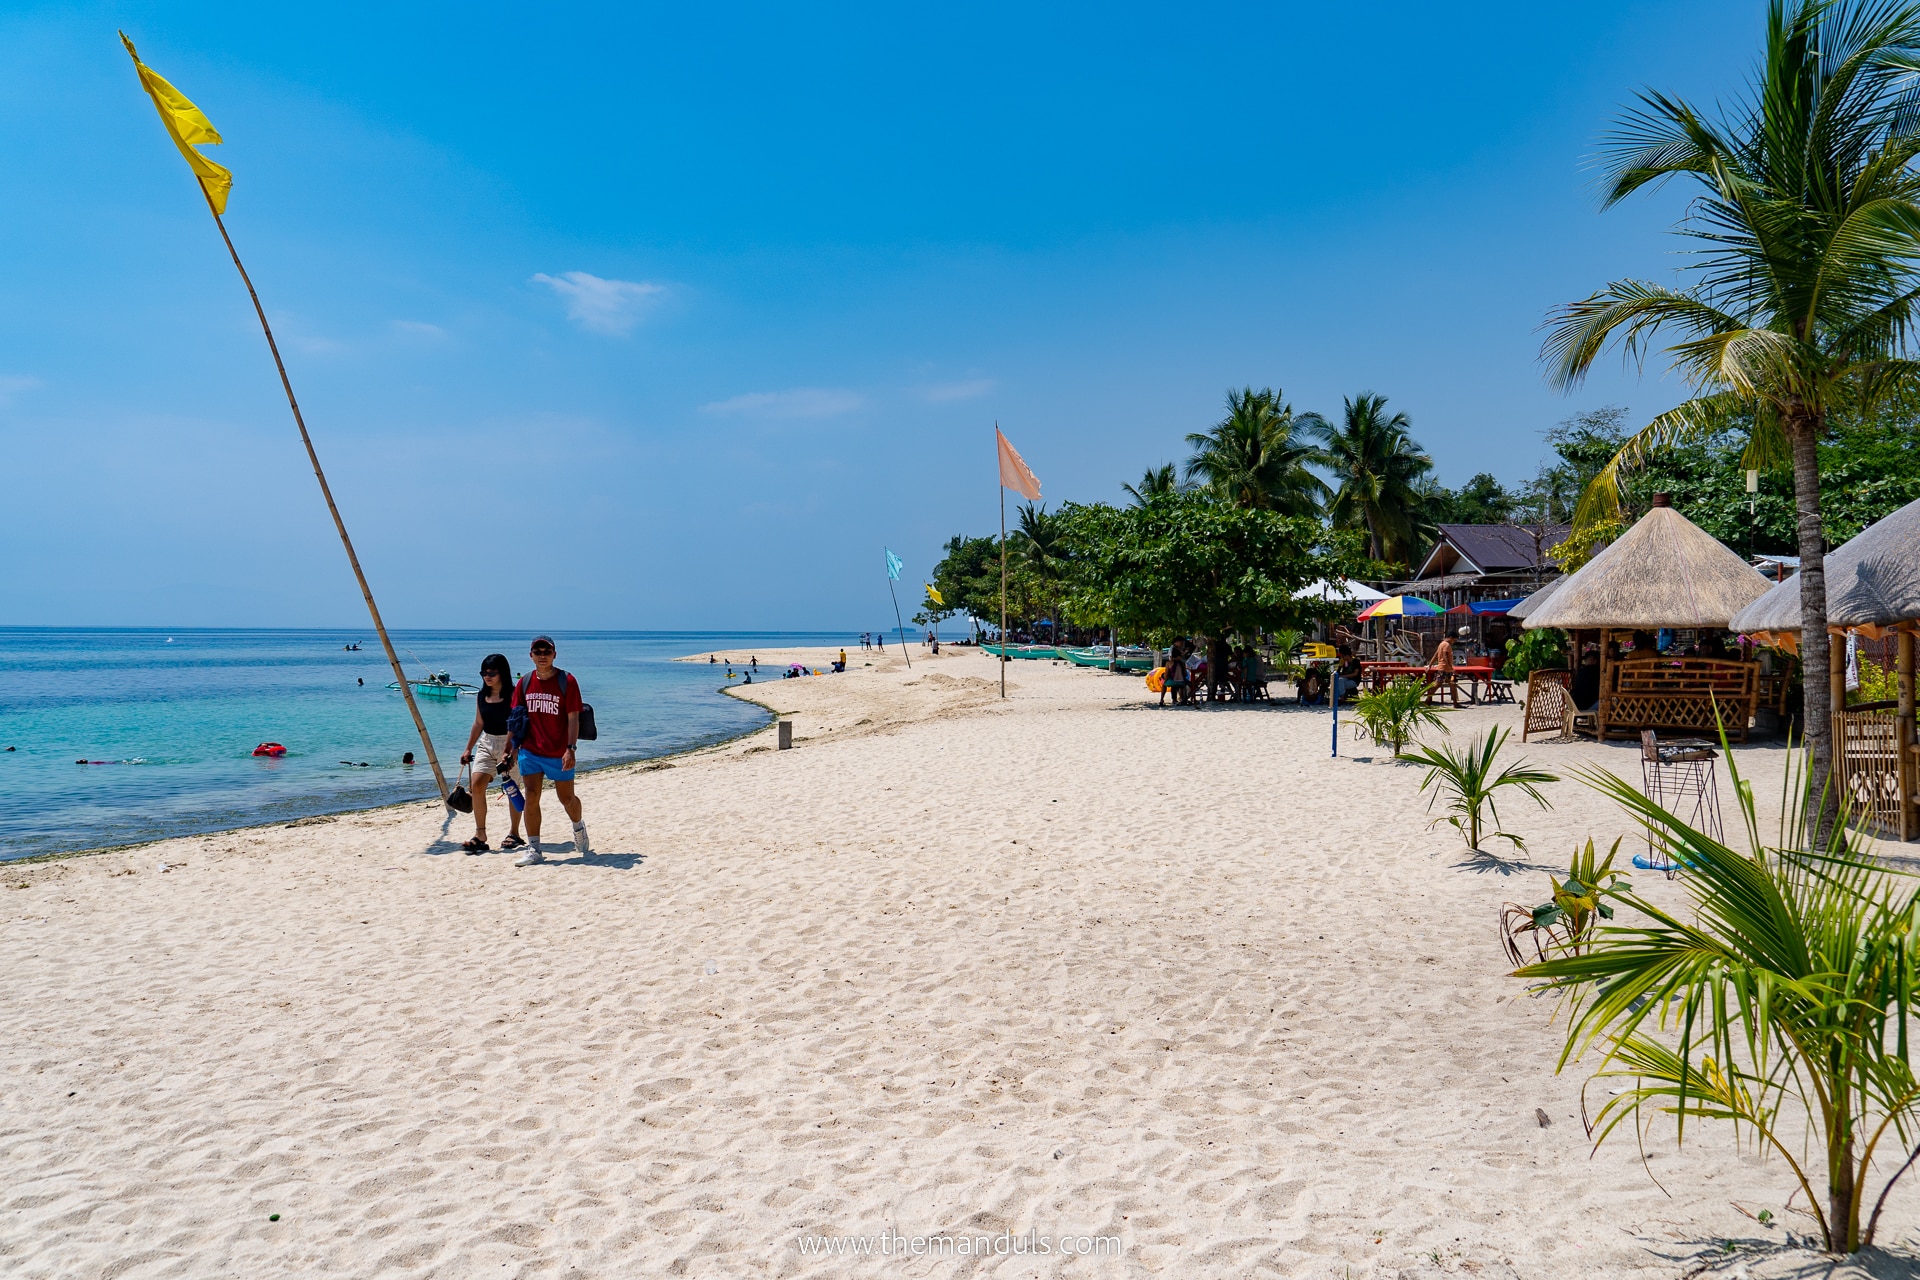 Lambug Beach, Cebu Island, Philippines, Lambug beach travel guide, Moalboal beaches, Cebu best beaches, Cebu travel guide